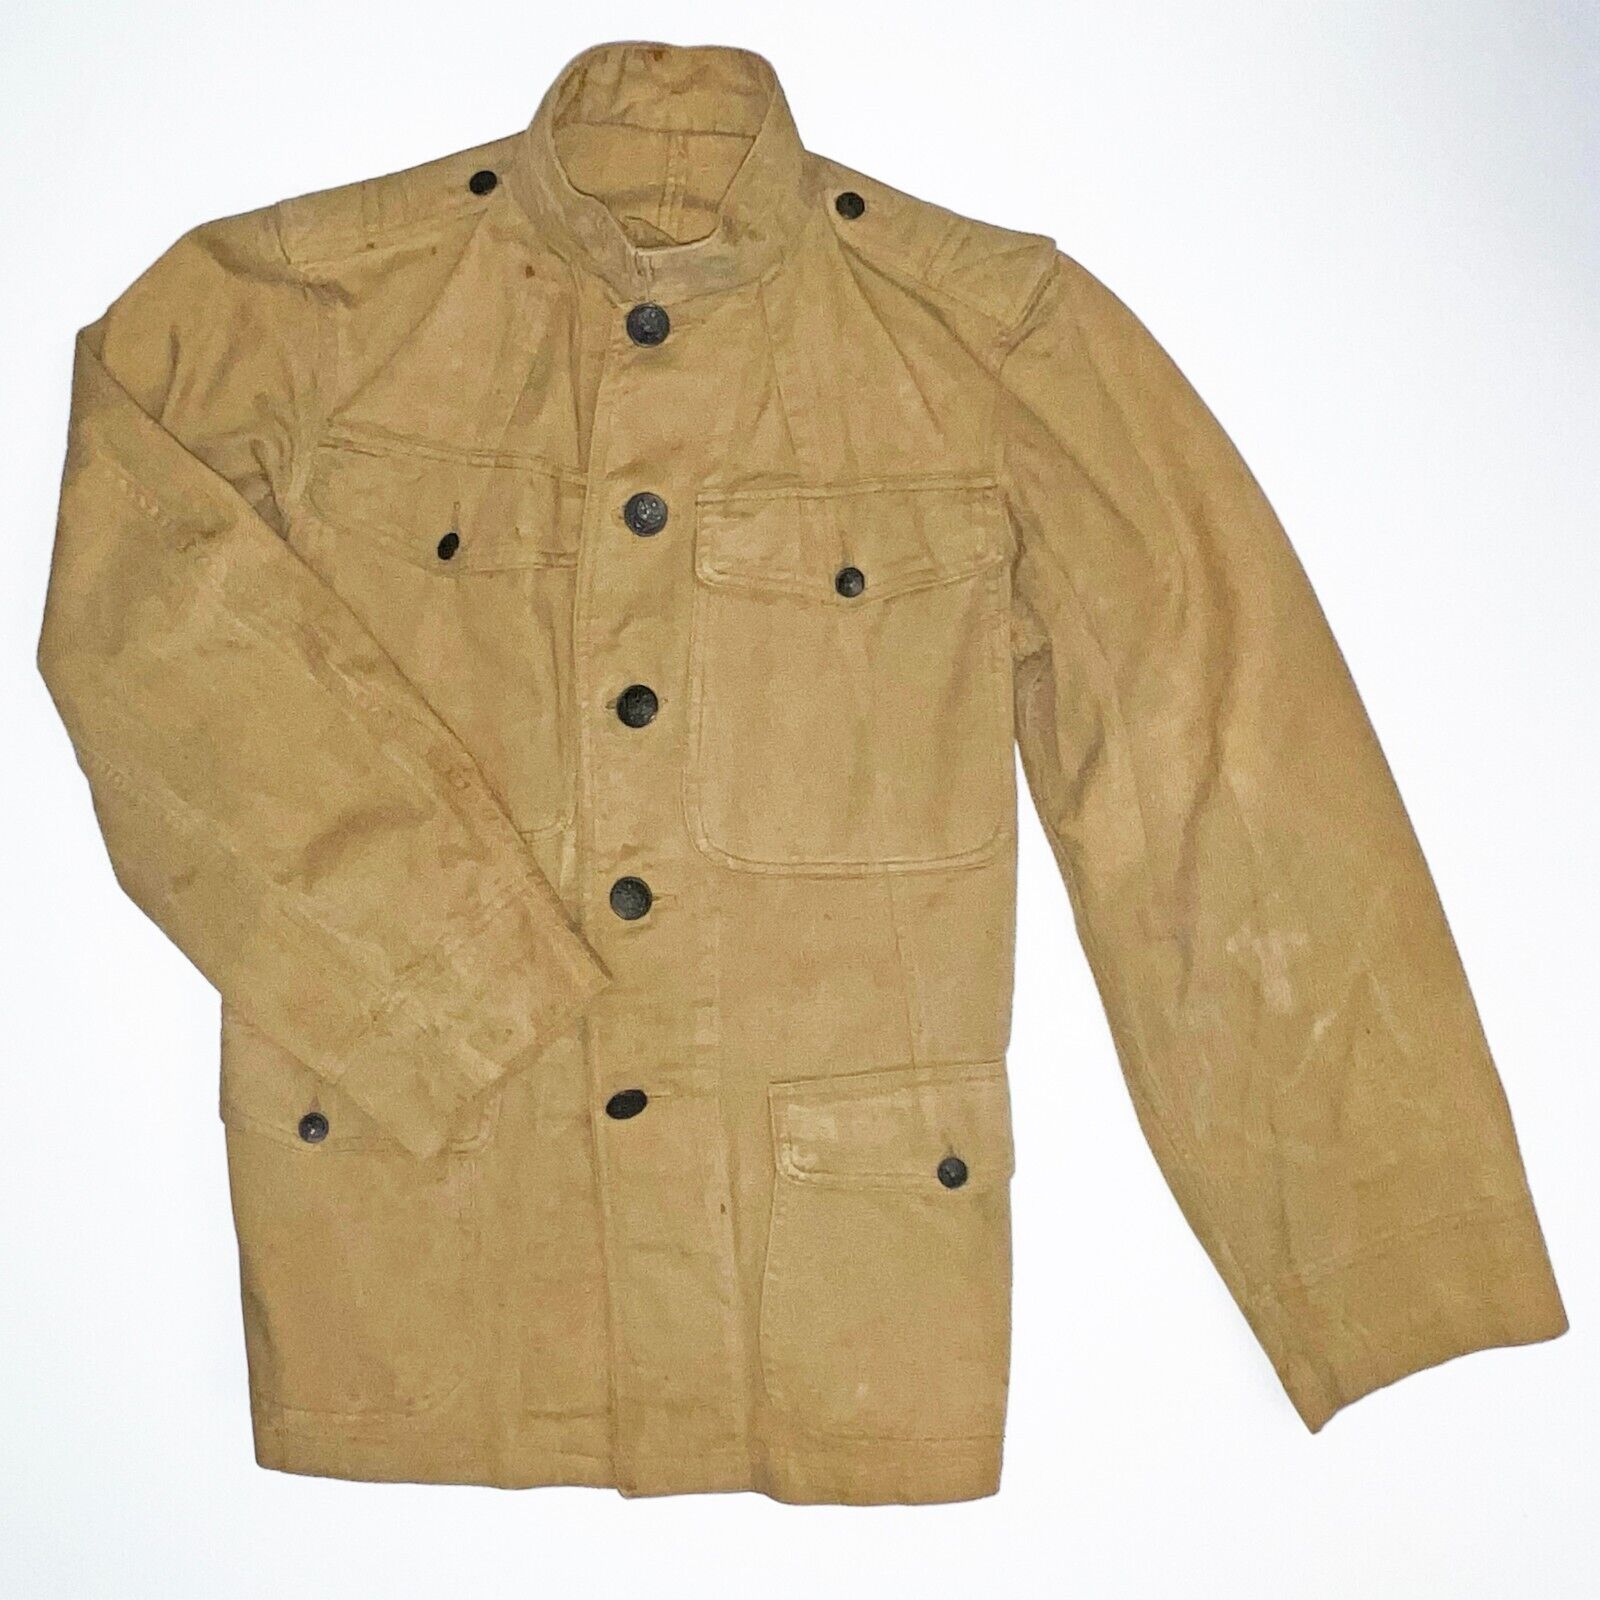 1911 WWI US Army Doughboy Uniform Summer Service Coat Jacket - BATTLE PROVENANCE